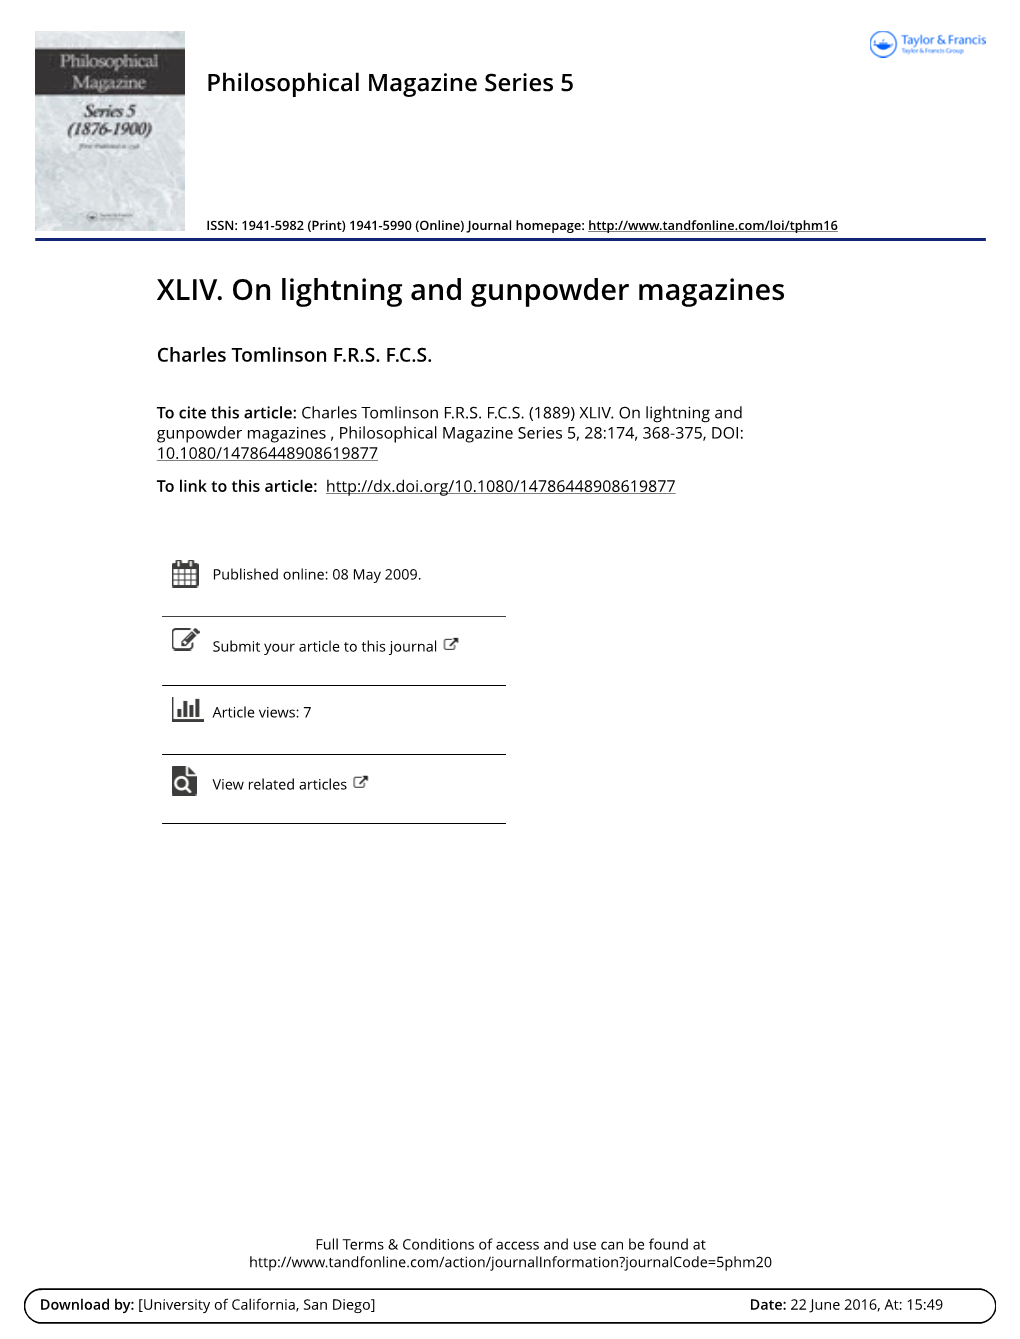 XLIV. on Lightning and Gunpowder Magazines